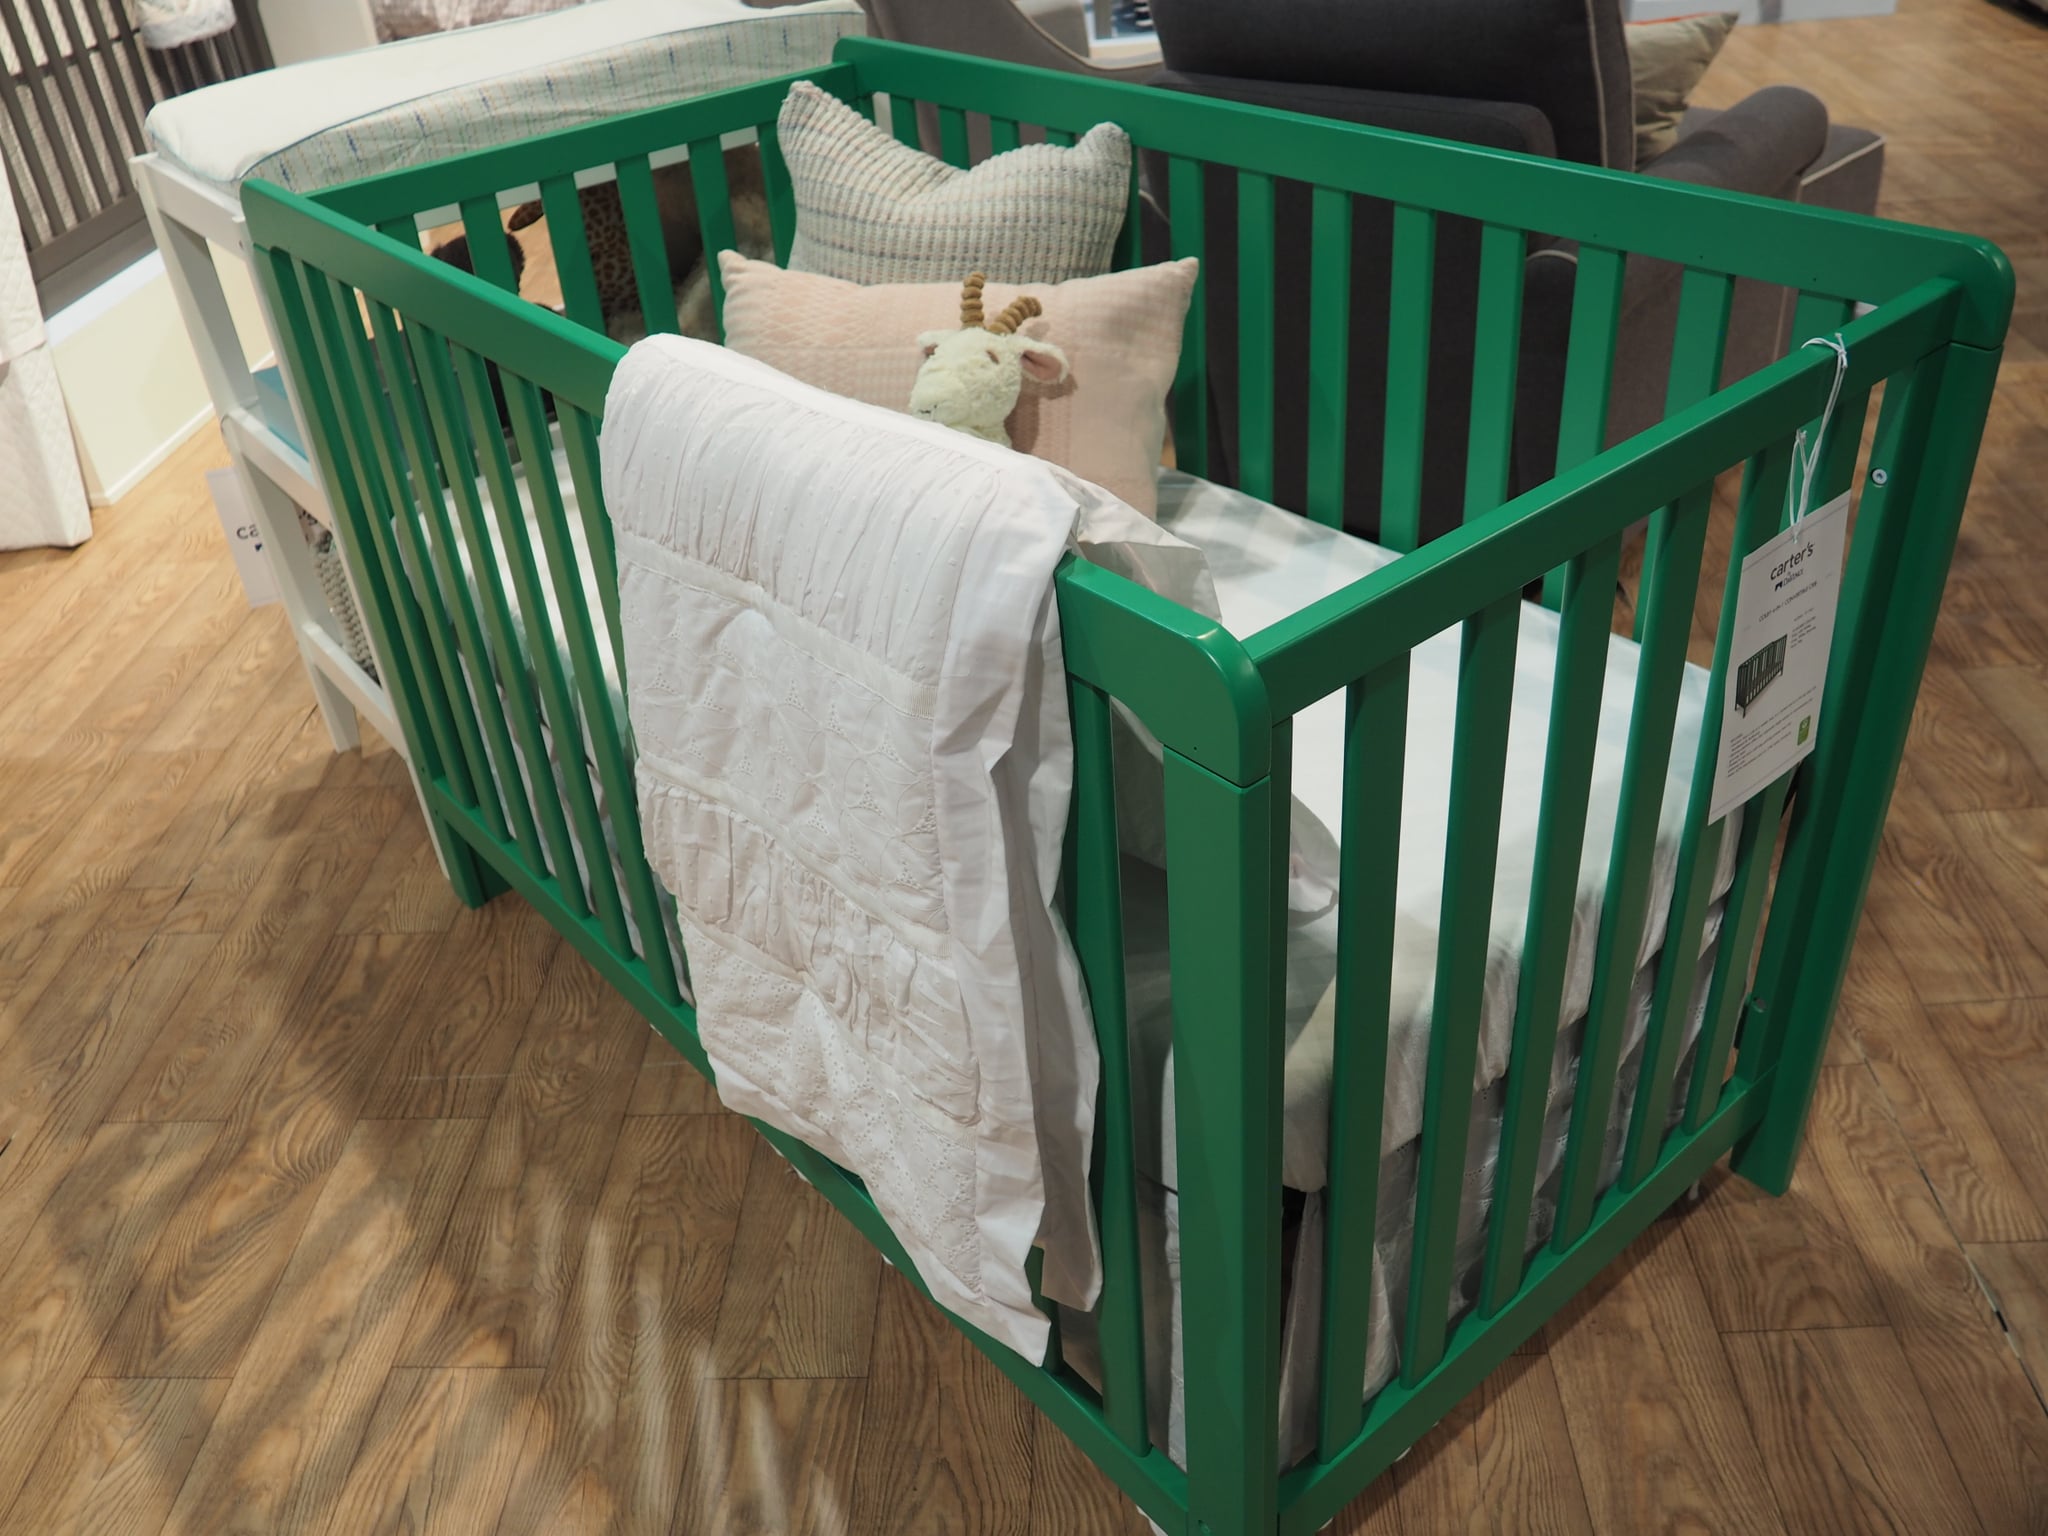 carters baby crib